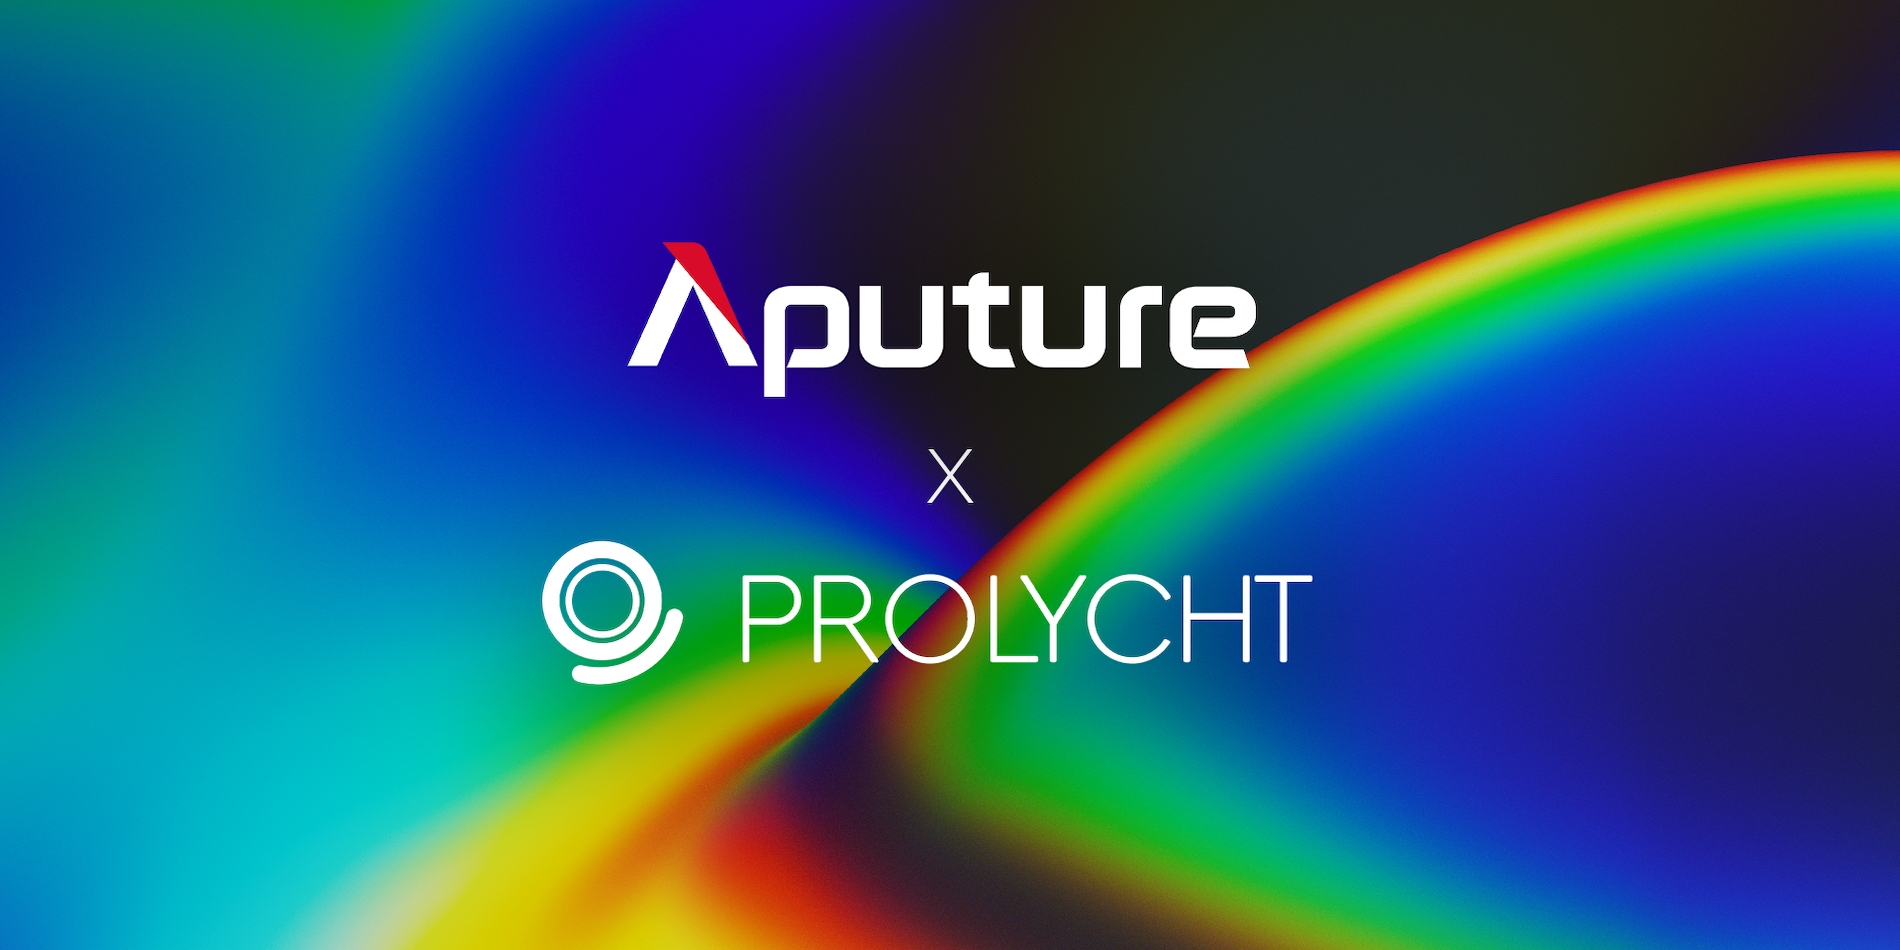 NP Aputure Prolycht Announcement Visual 2x1